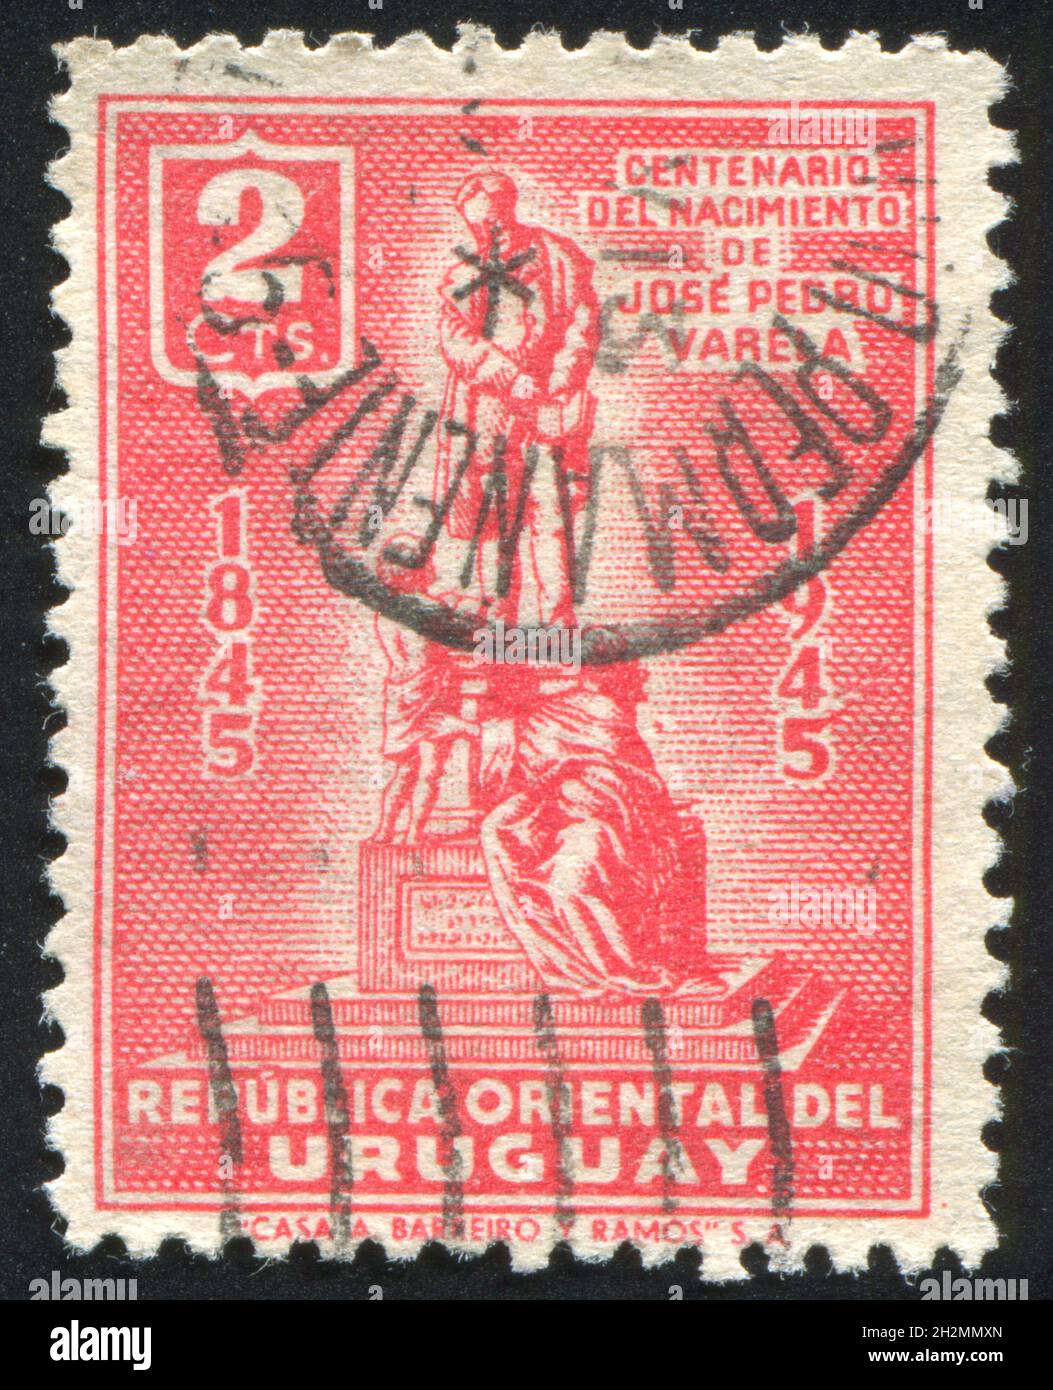 URUGUAY - CIRCA 1945: stamp printed by Uruguay, shows Monument to Jose Pedro Varela, circa 1945 Stock Photo